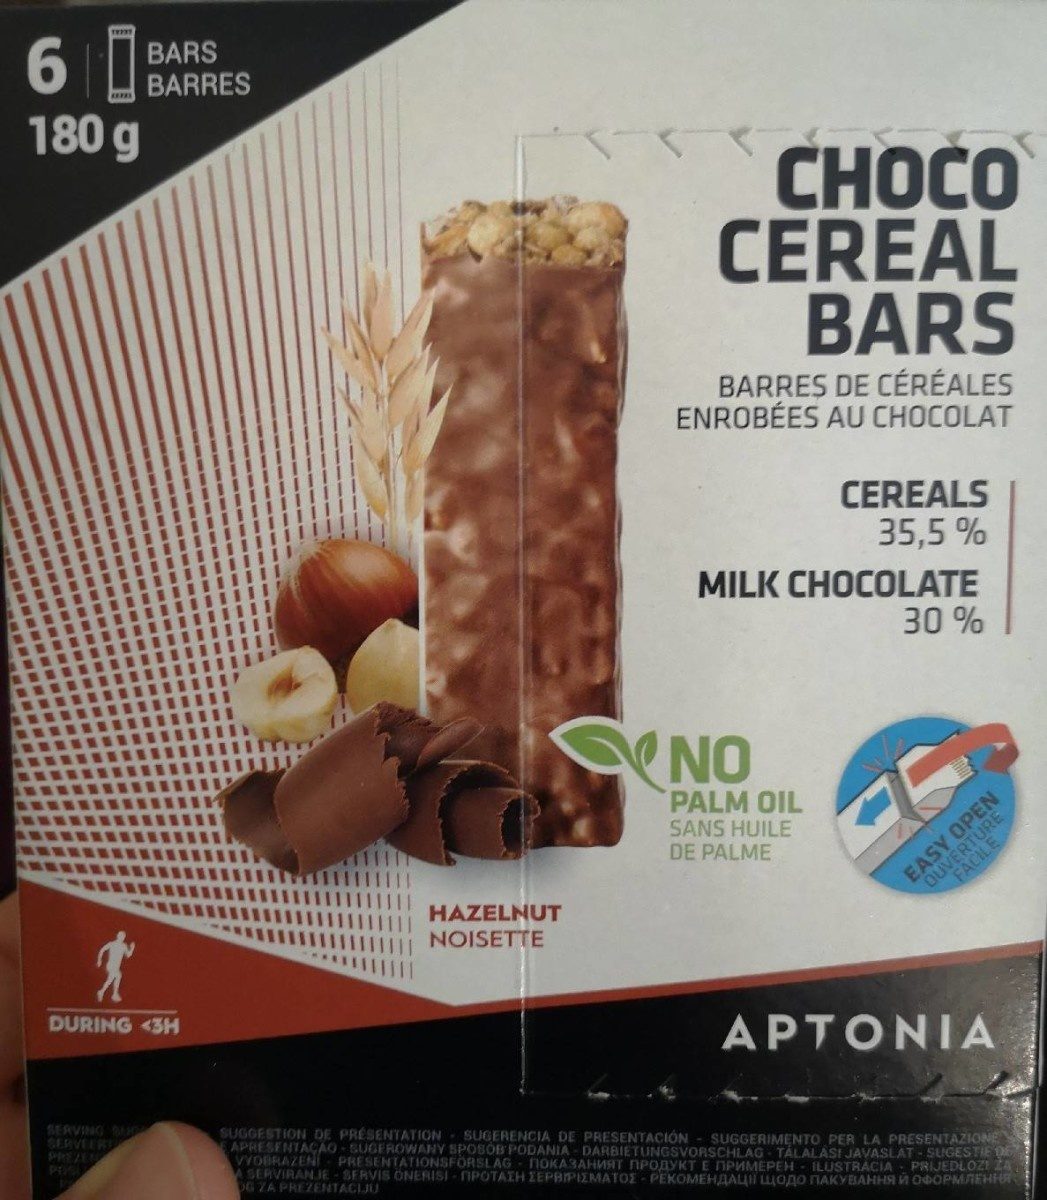 Choco cereal bars - Aptonia